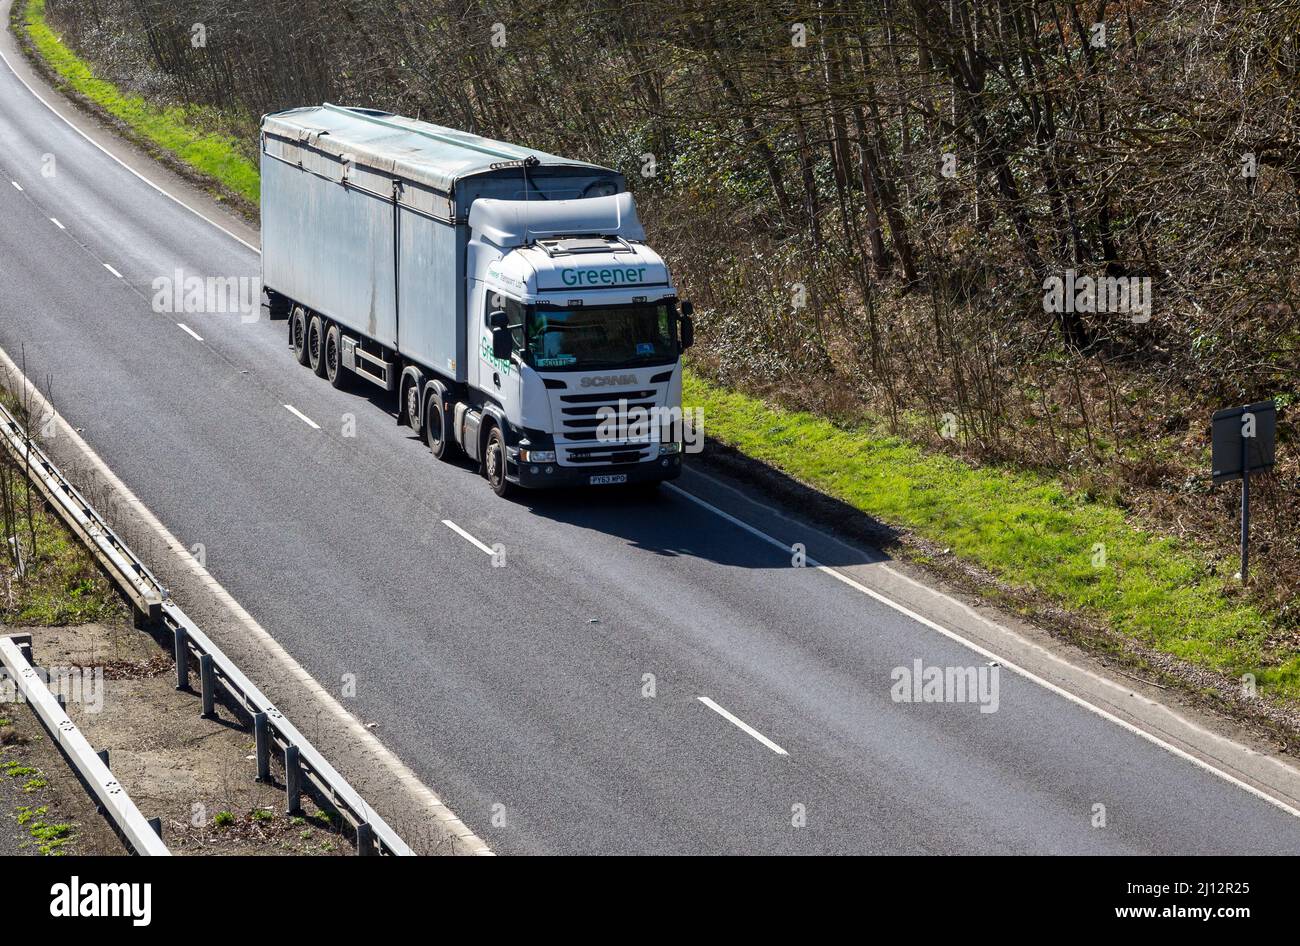 Scania Greener lorry HGV on A12 dual carriageway road, Loudham, Suffolk, England, UK Stock Photo